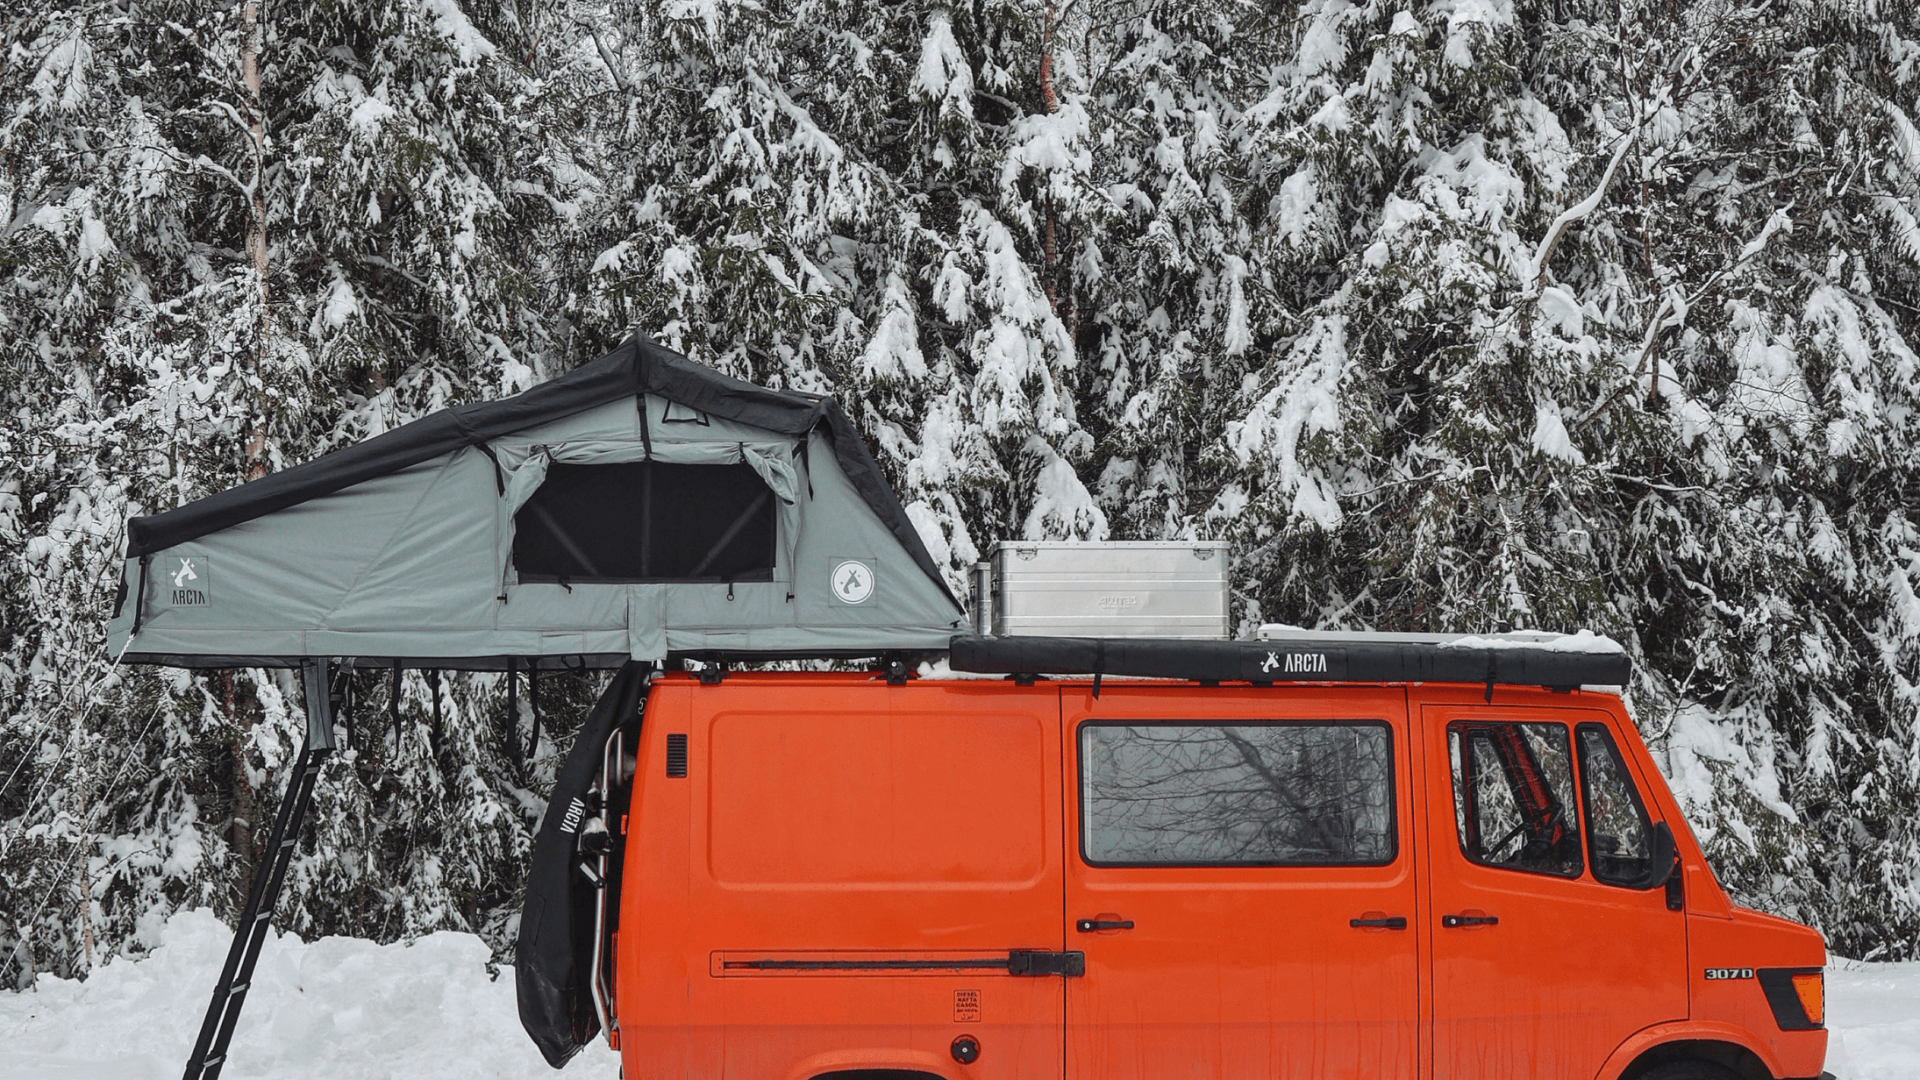 Arcta Dachzelt auf rotem Bus im Winter